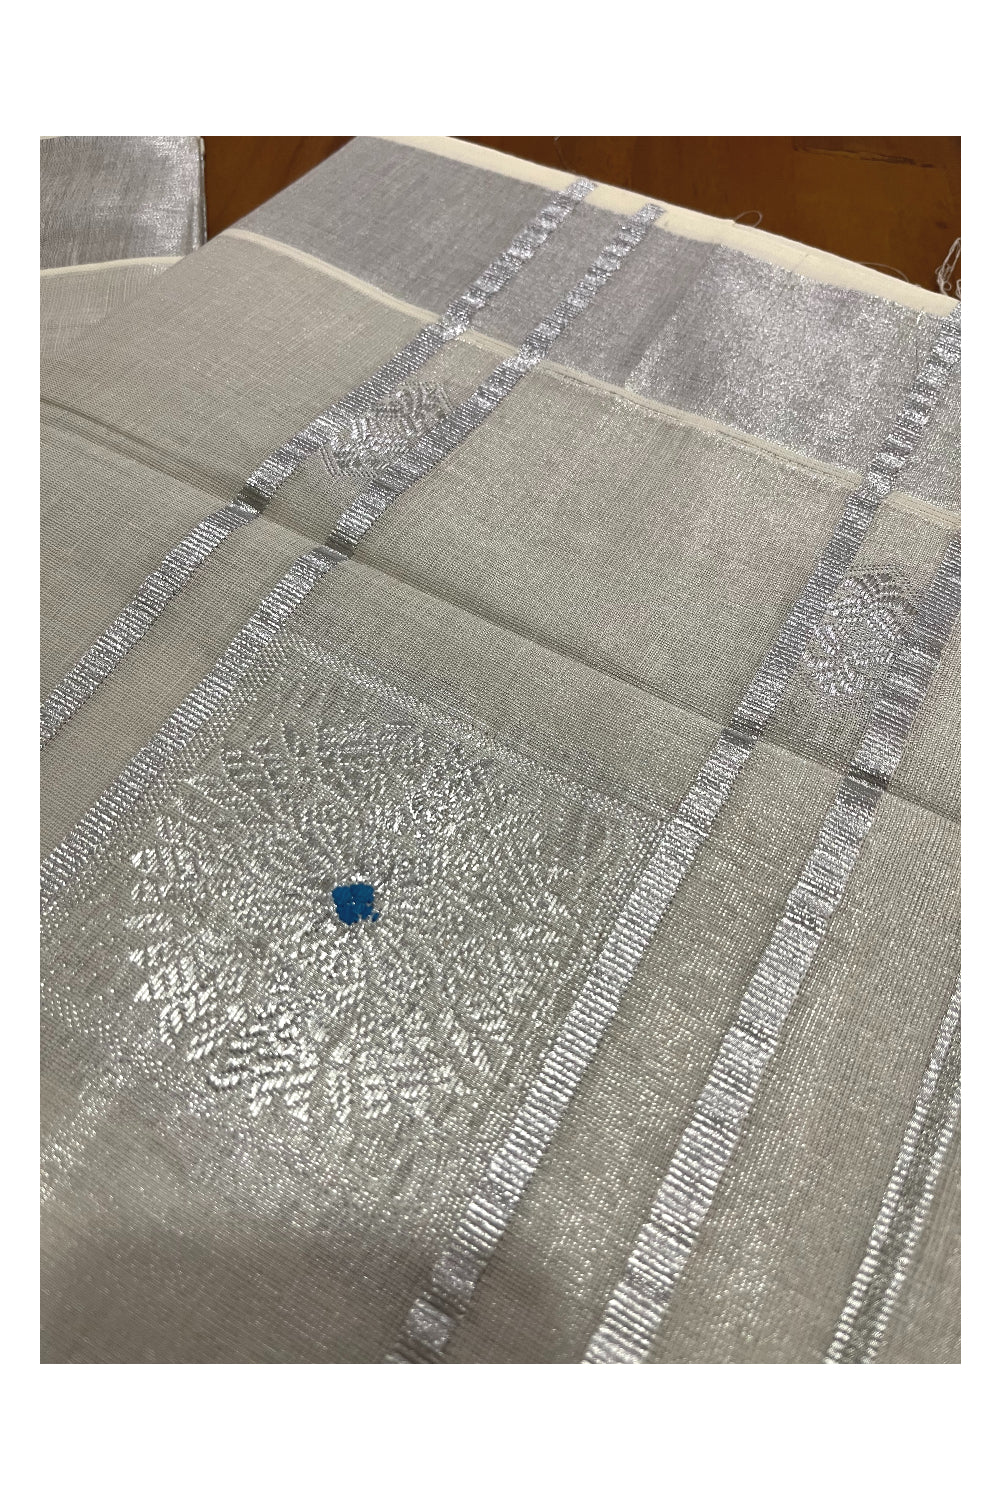 Kerala Silver Tissue Kasavu Saree with Floral Thread Designs on Pallu